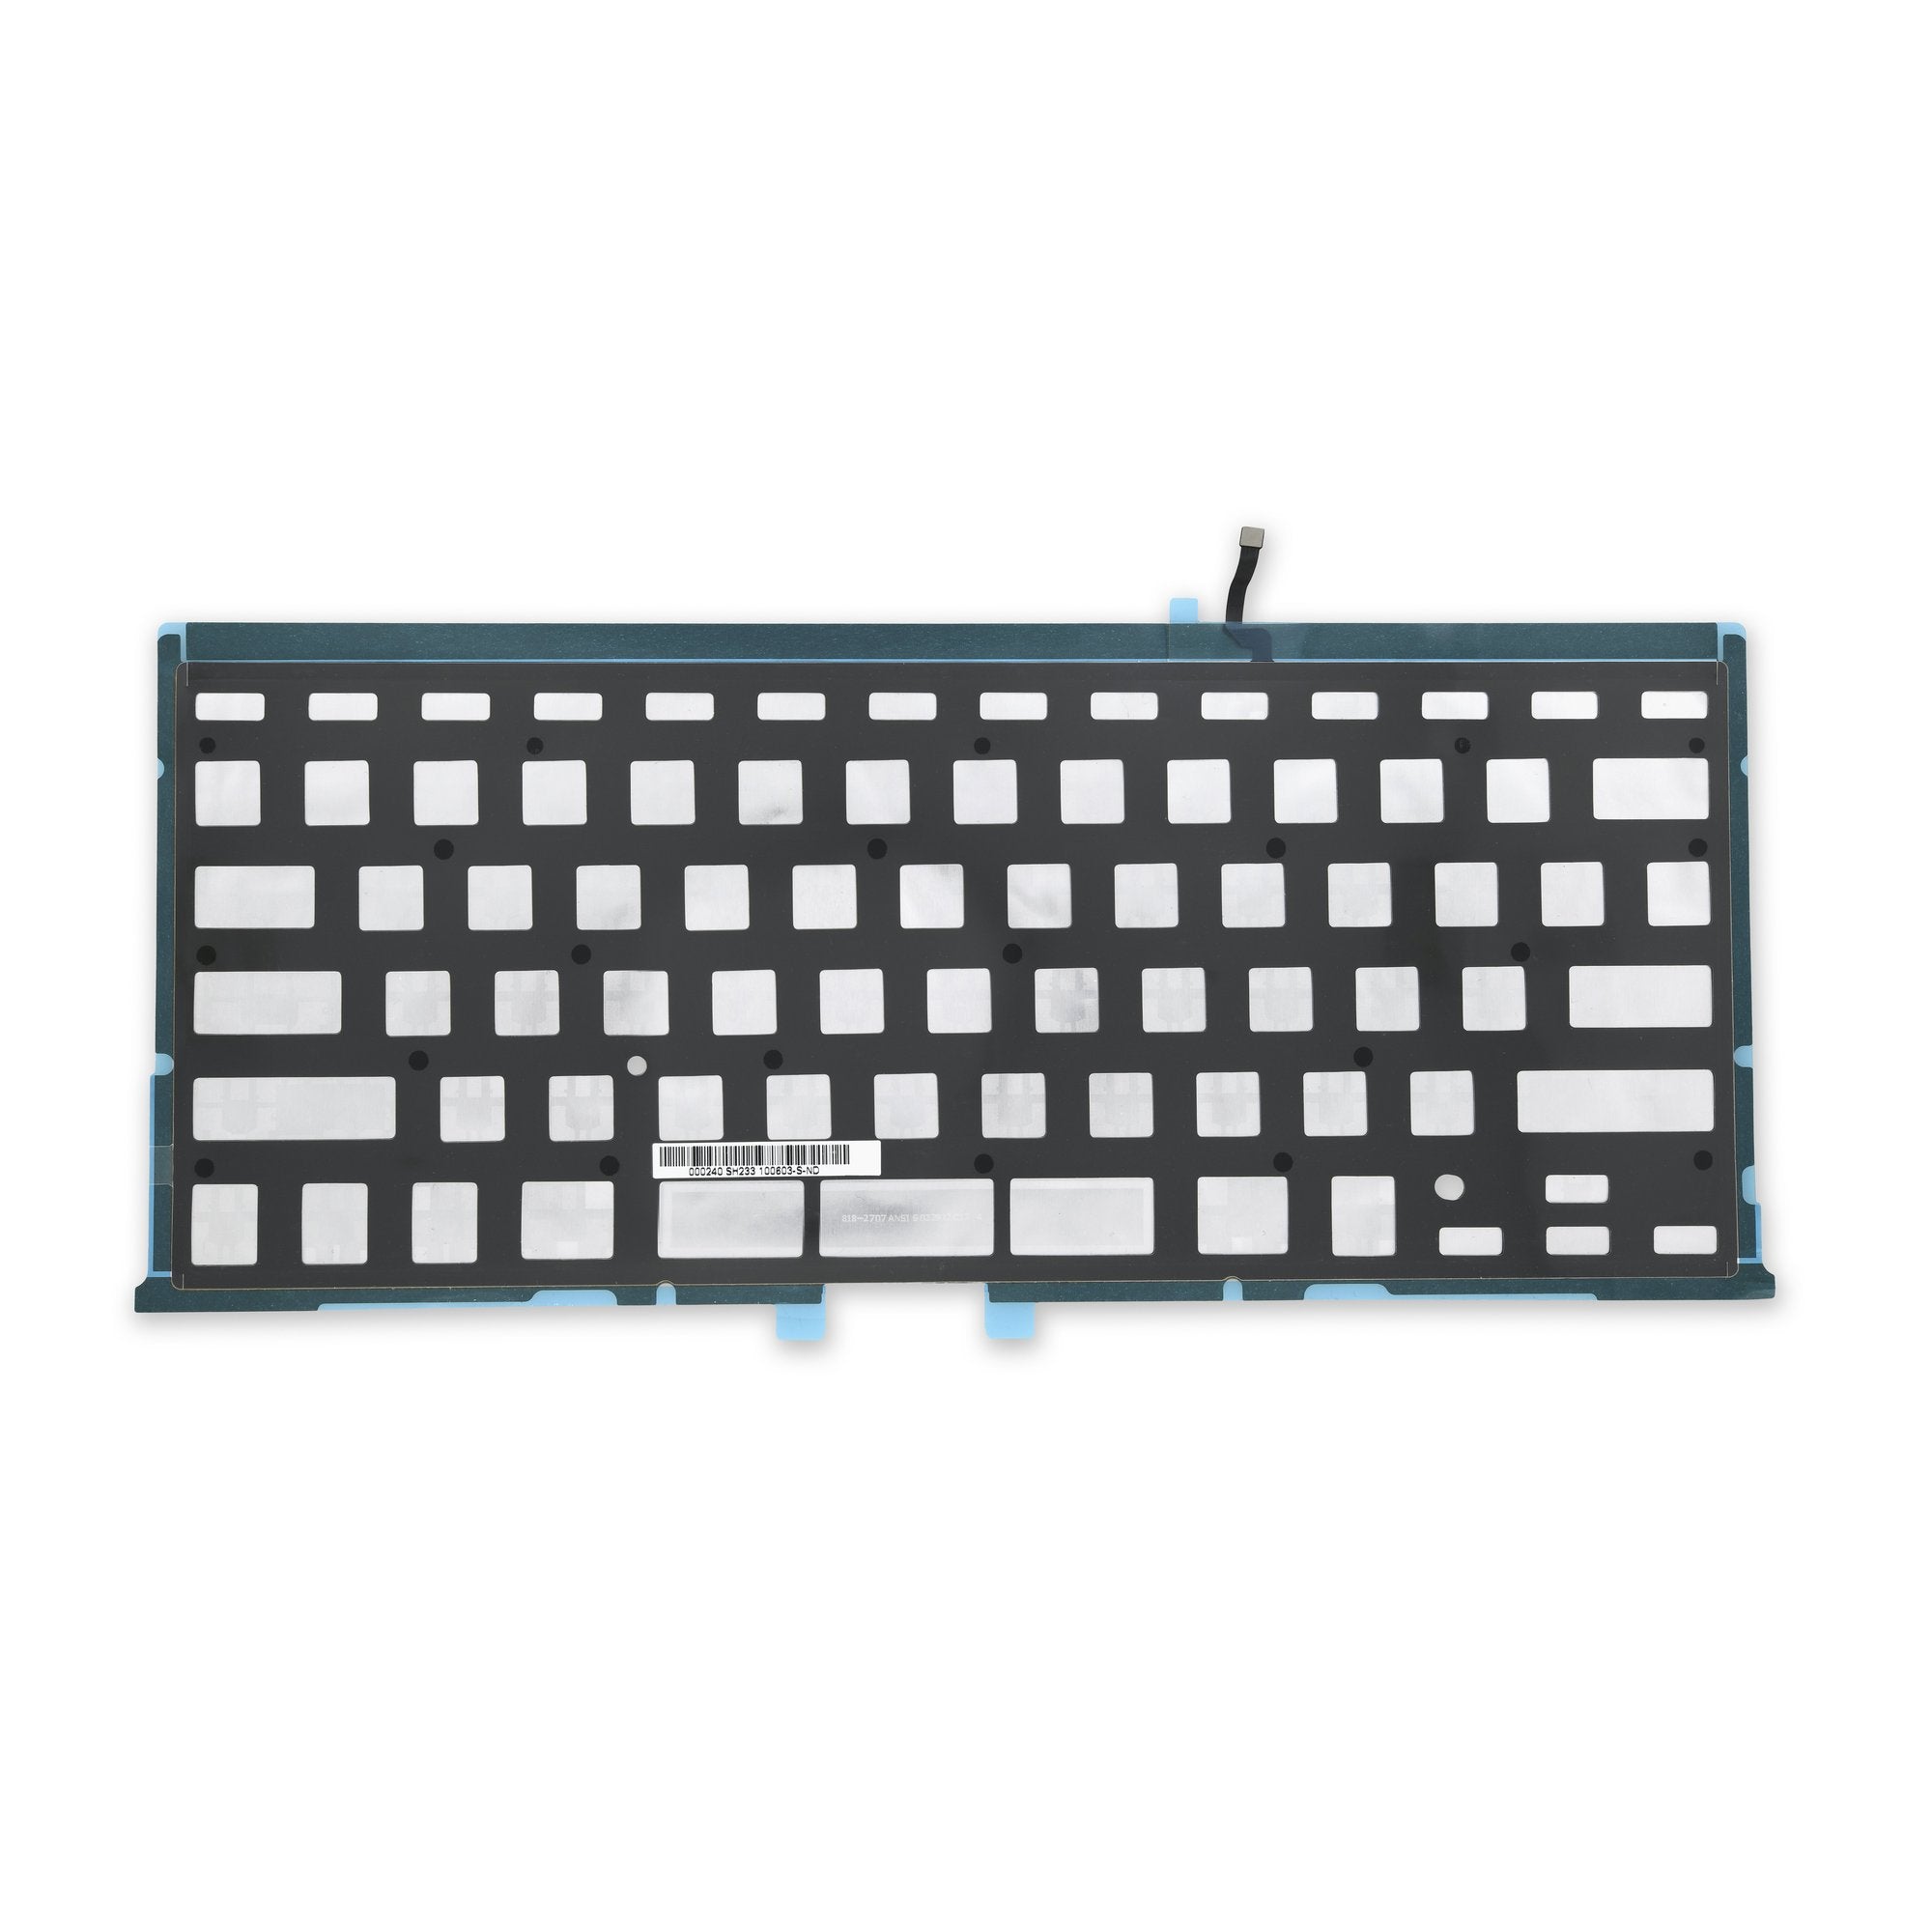 MacBook Pro 15" Retina (Mid 2012-Mid 2015) Keyboard Backlight